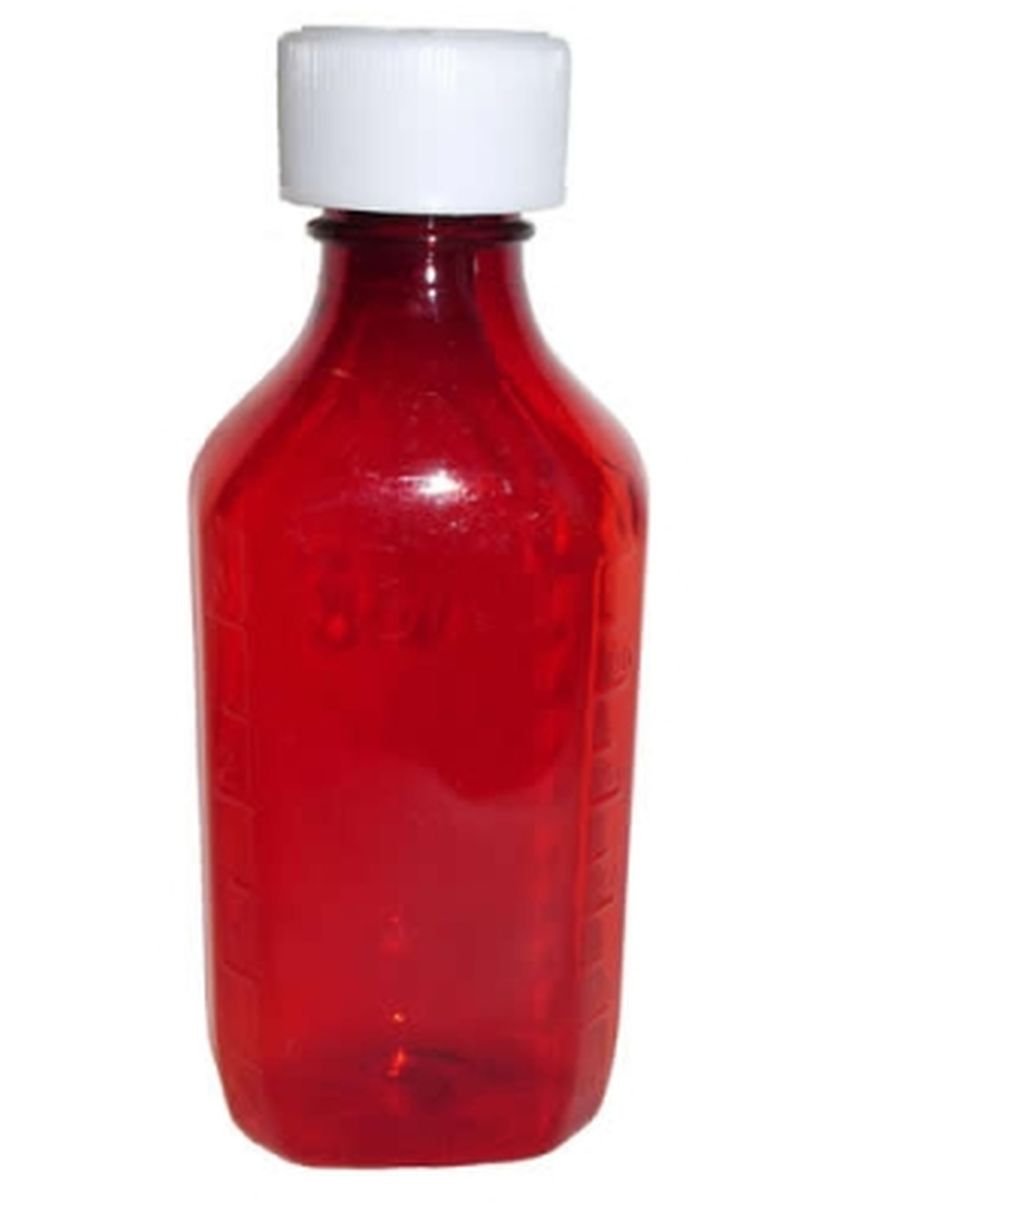 Five Stars Amber Oval Pharmacy Liquid Medicine Bottles, child Resistant caps, 2 Oz, case200 A